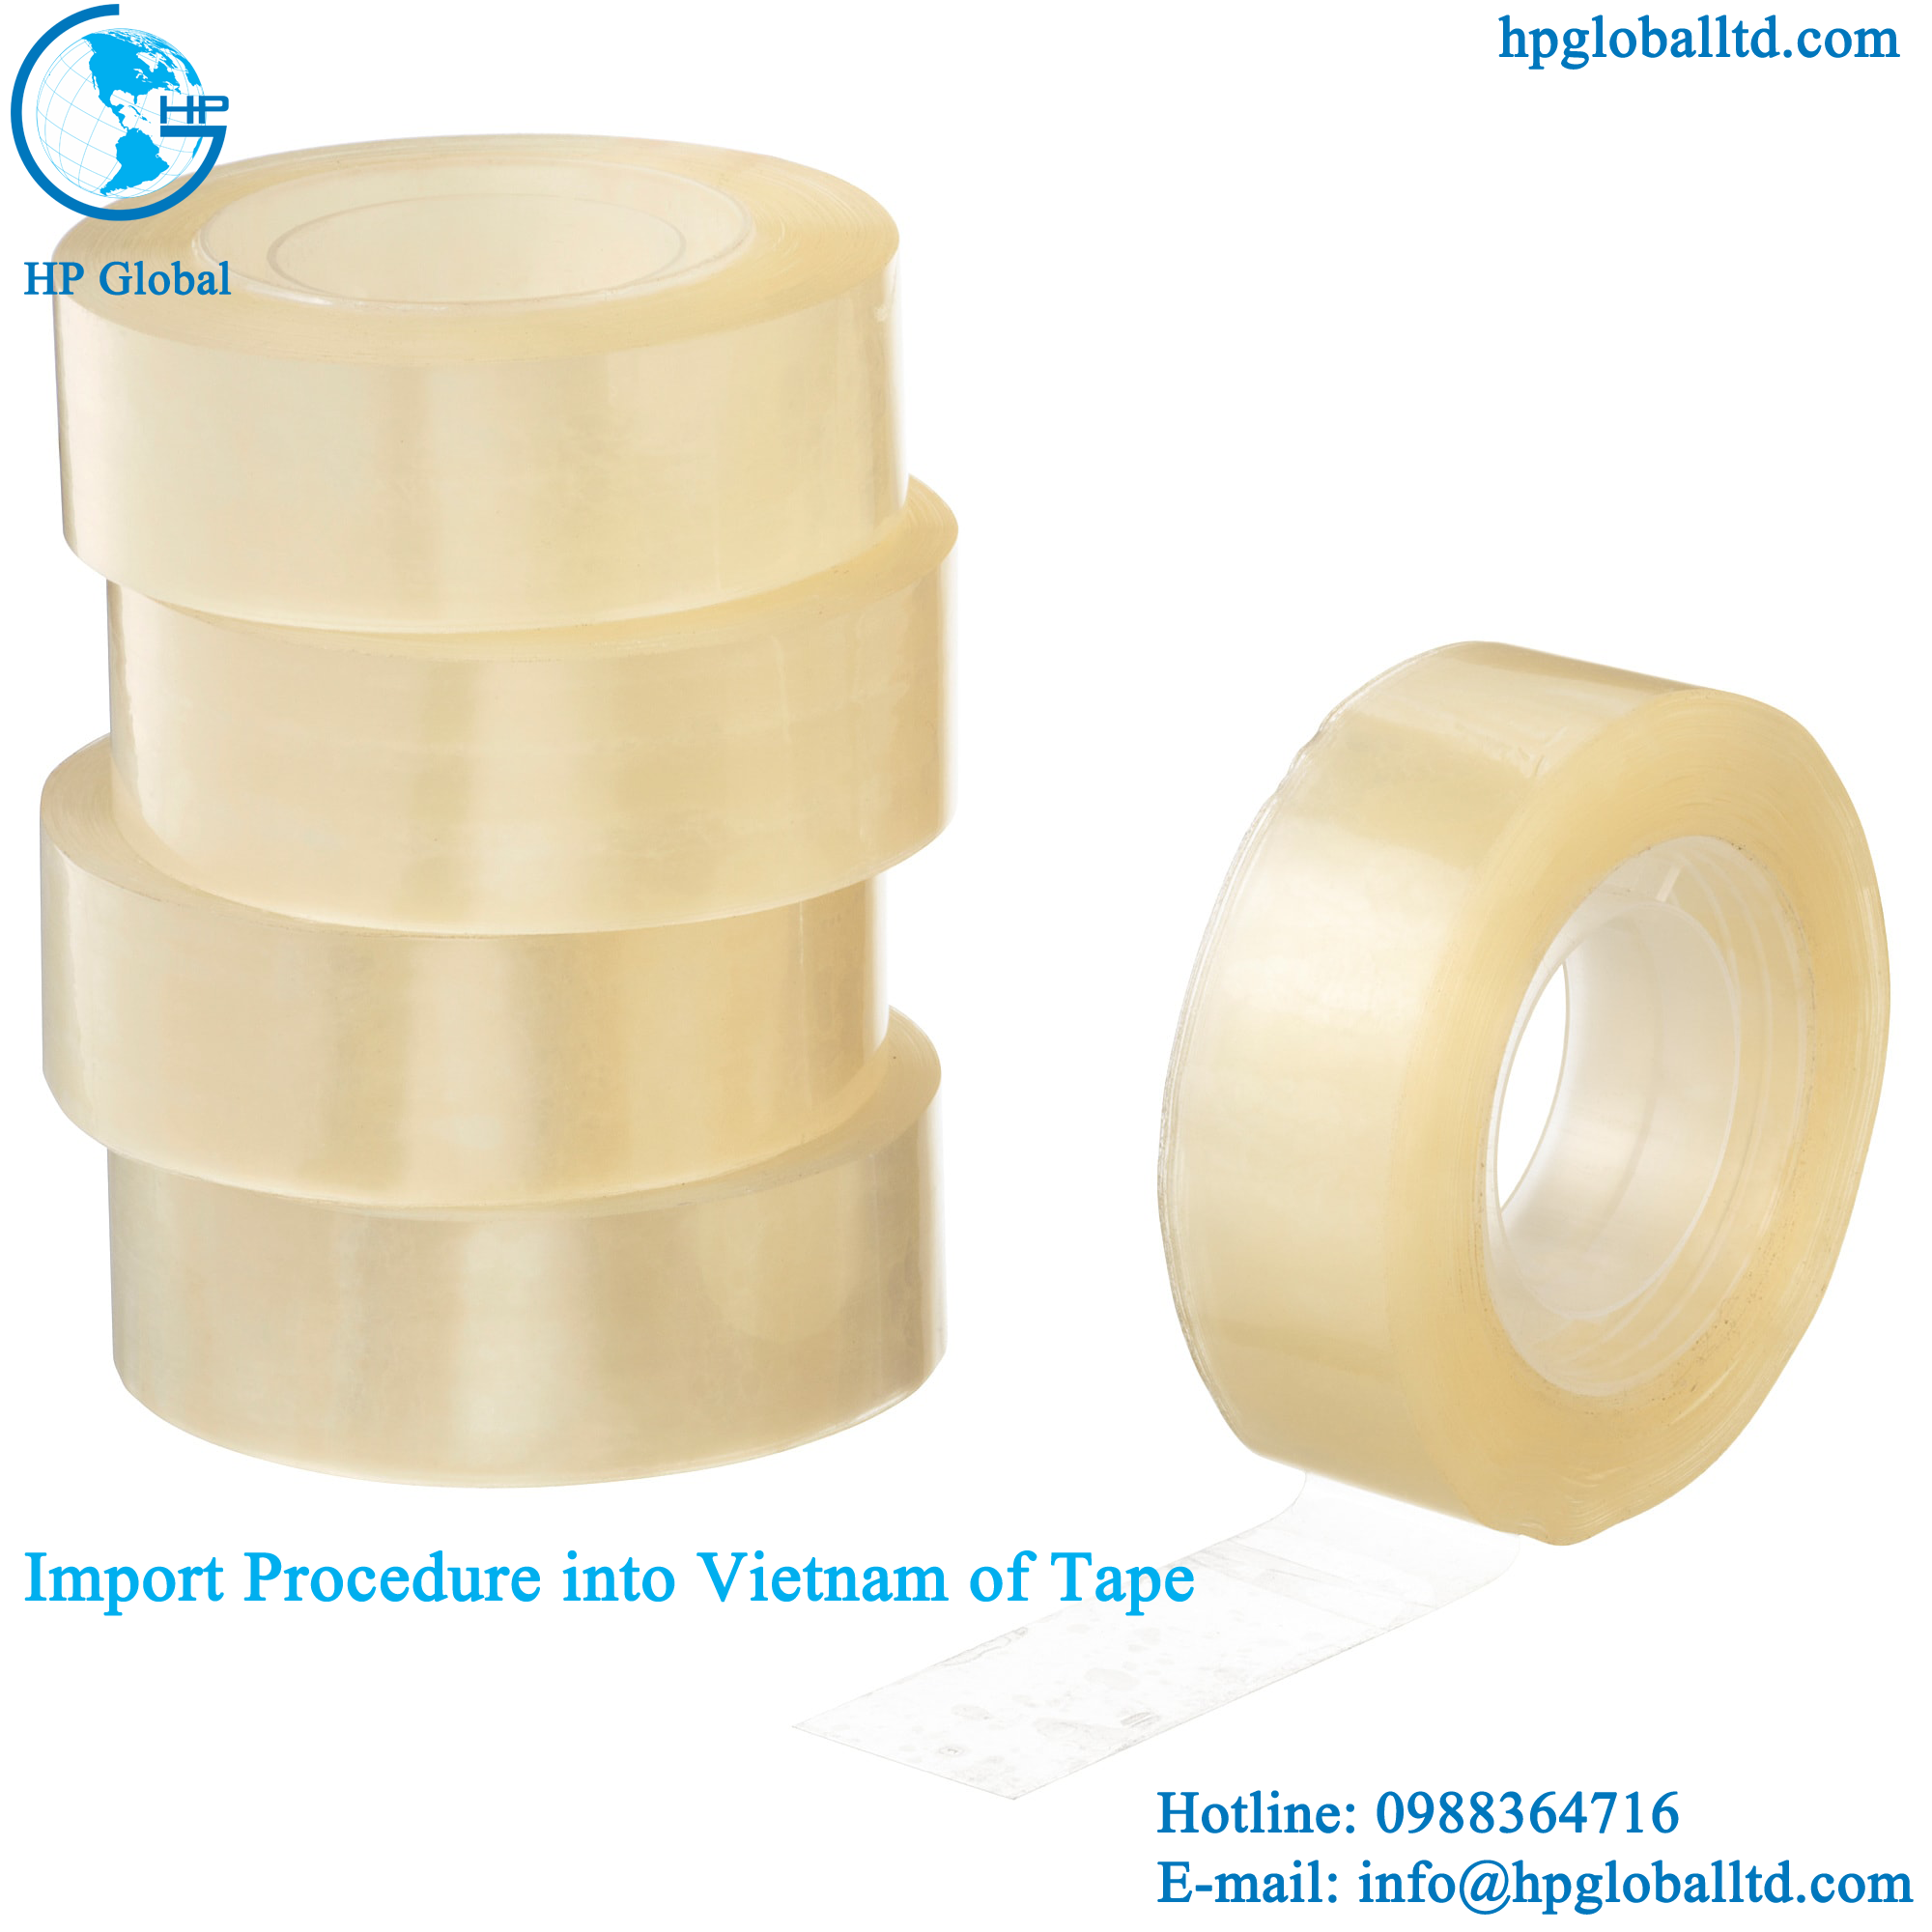 Import Procedure into Vietnam of Tape